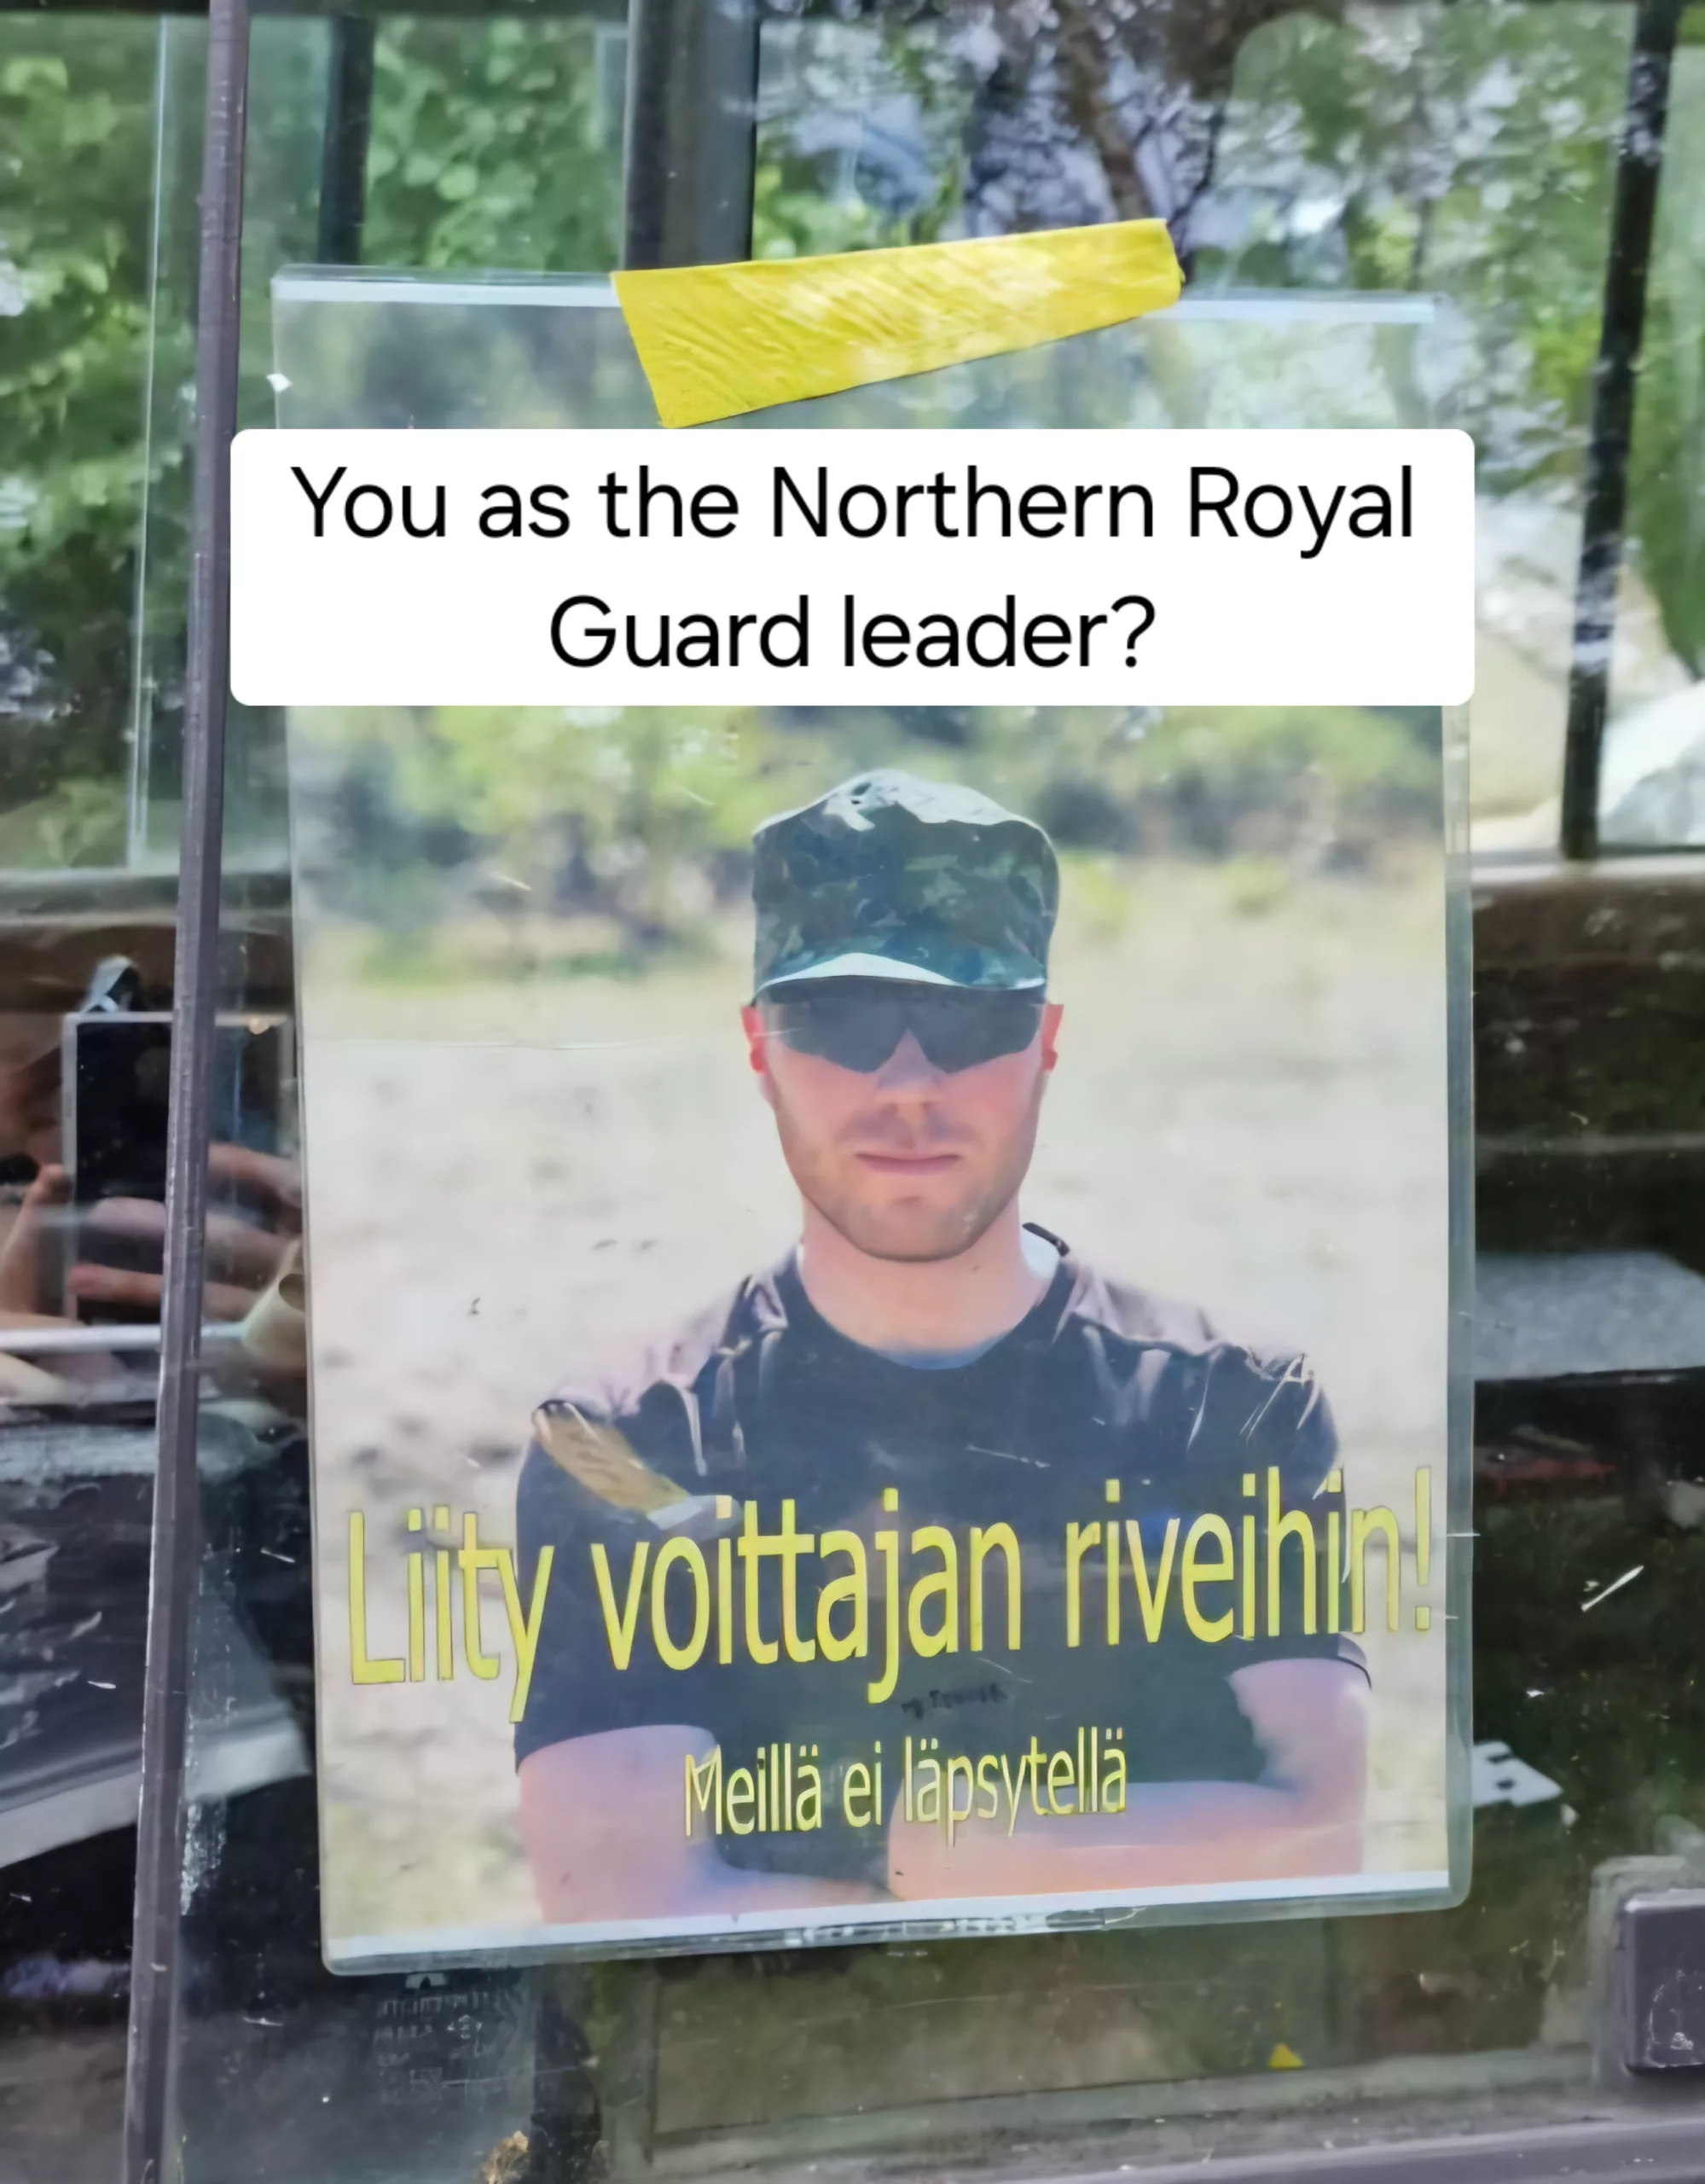 Northern Royal Guard command?